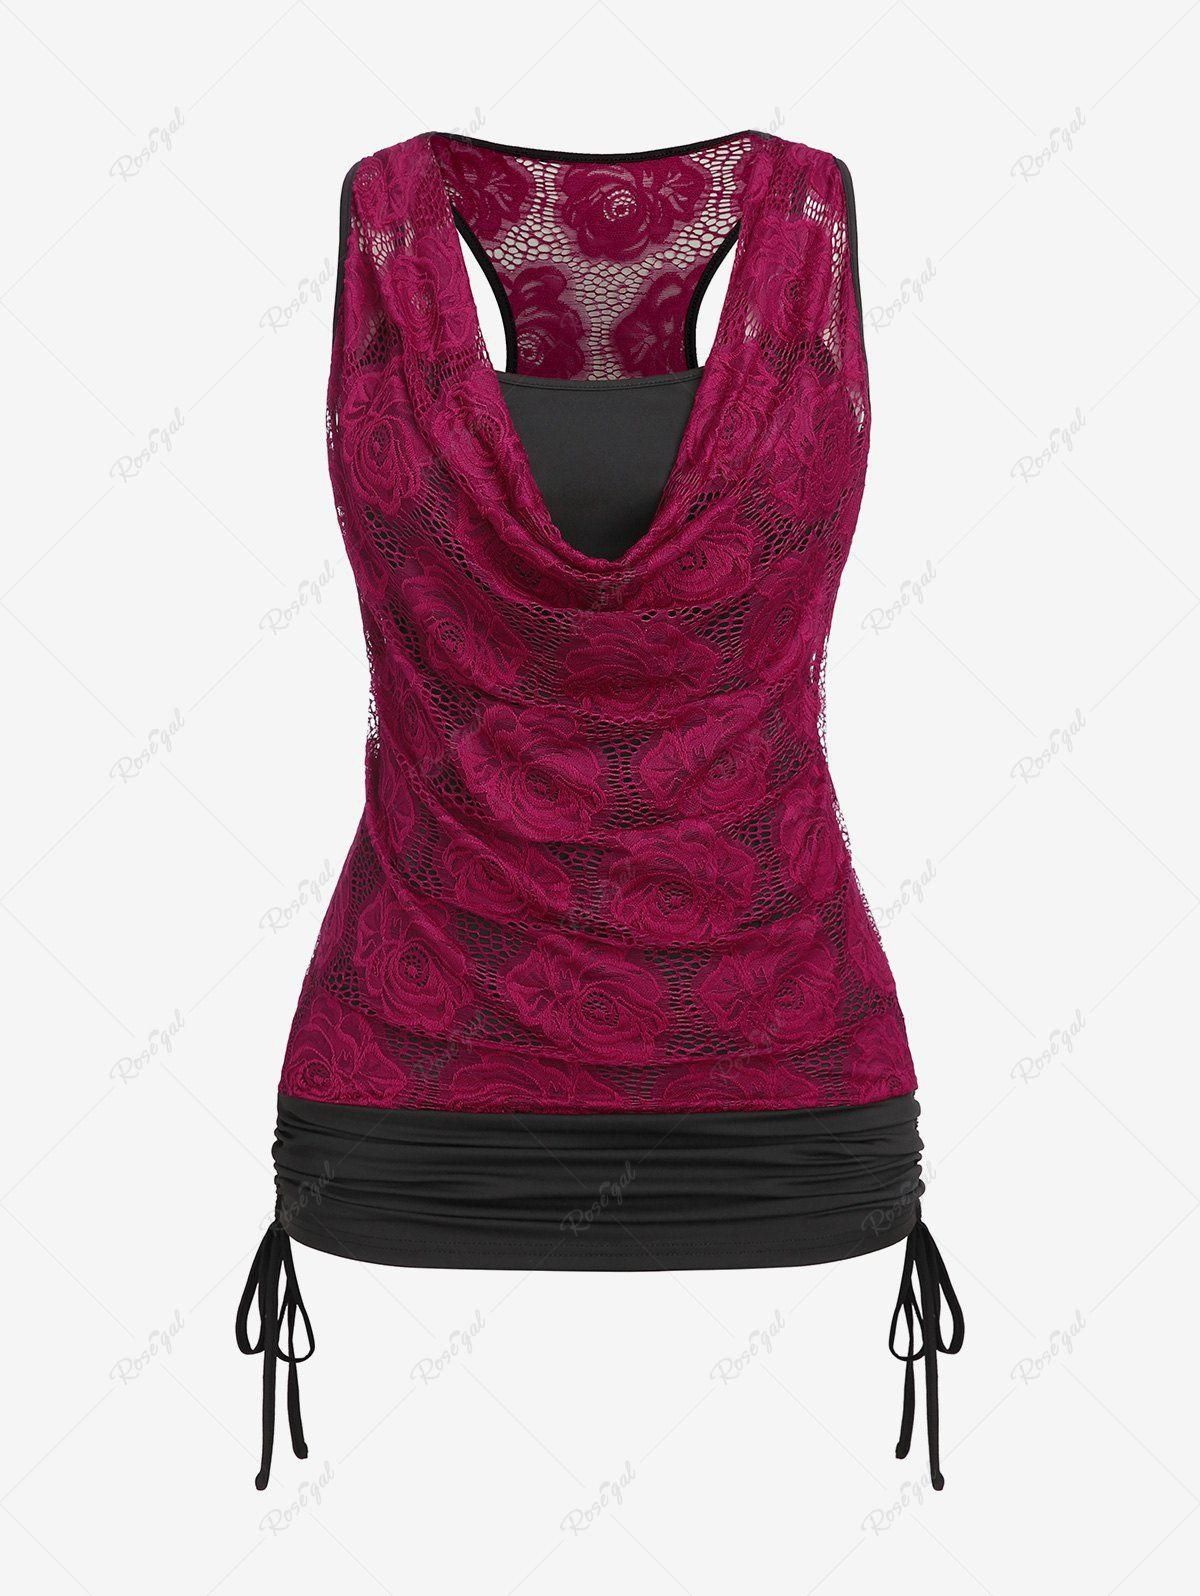 Plus Size Cowl Neck Cinched Rose Lace Tank Top - M | Us 10